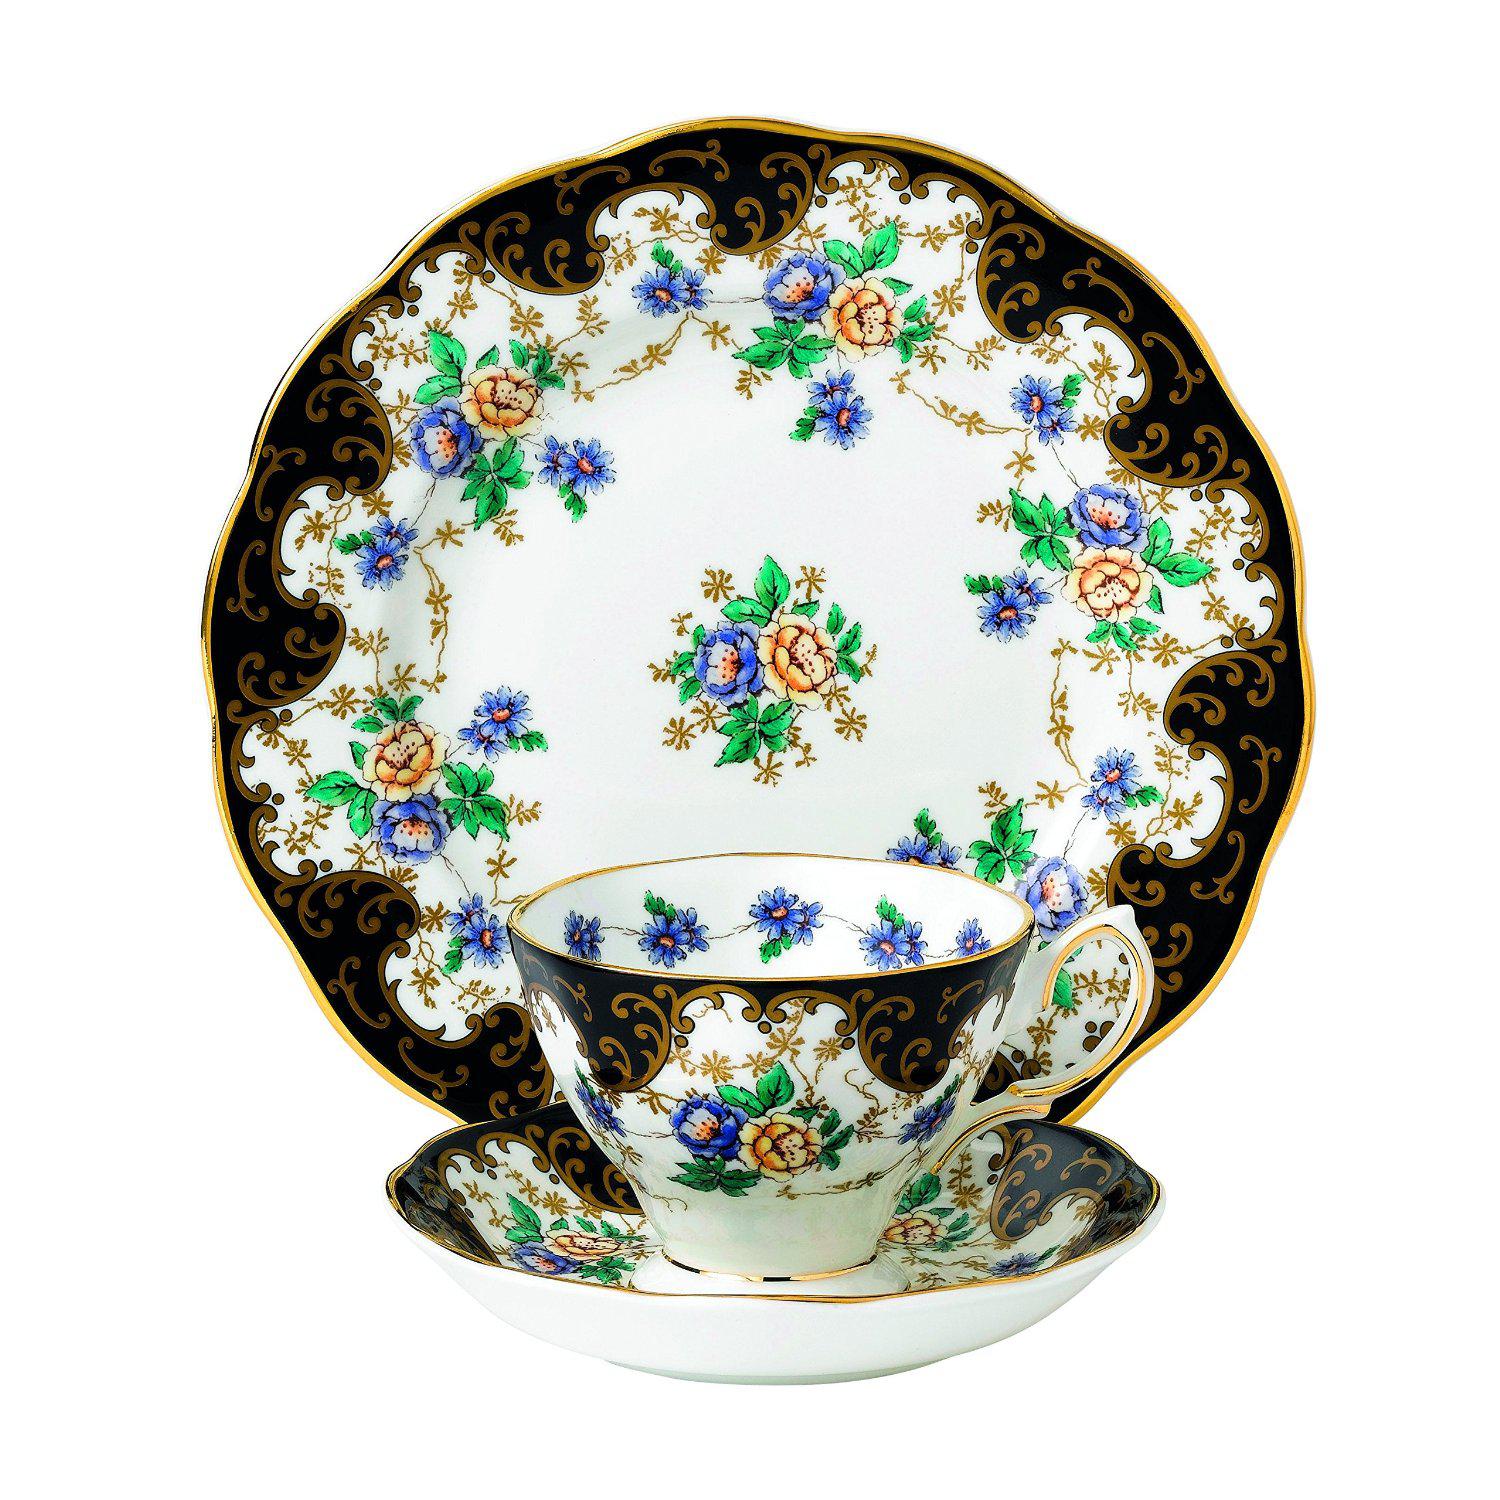 Royal Albert茶杯三件套 茶碟&盘子&茶杯 8英寸 多色